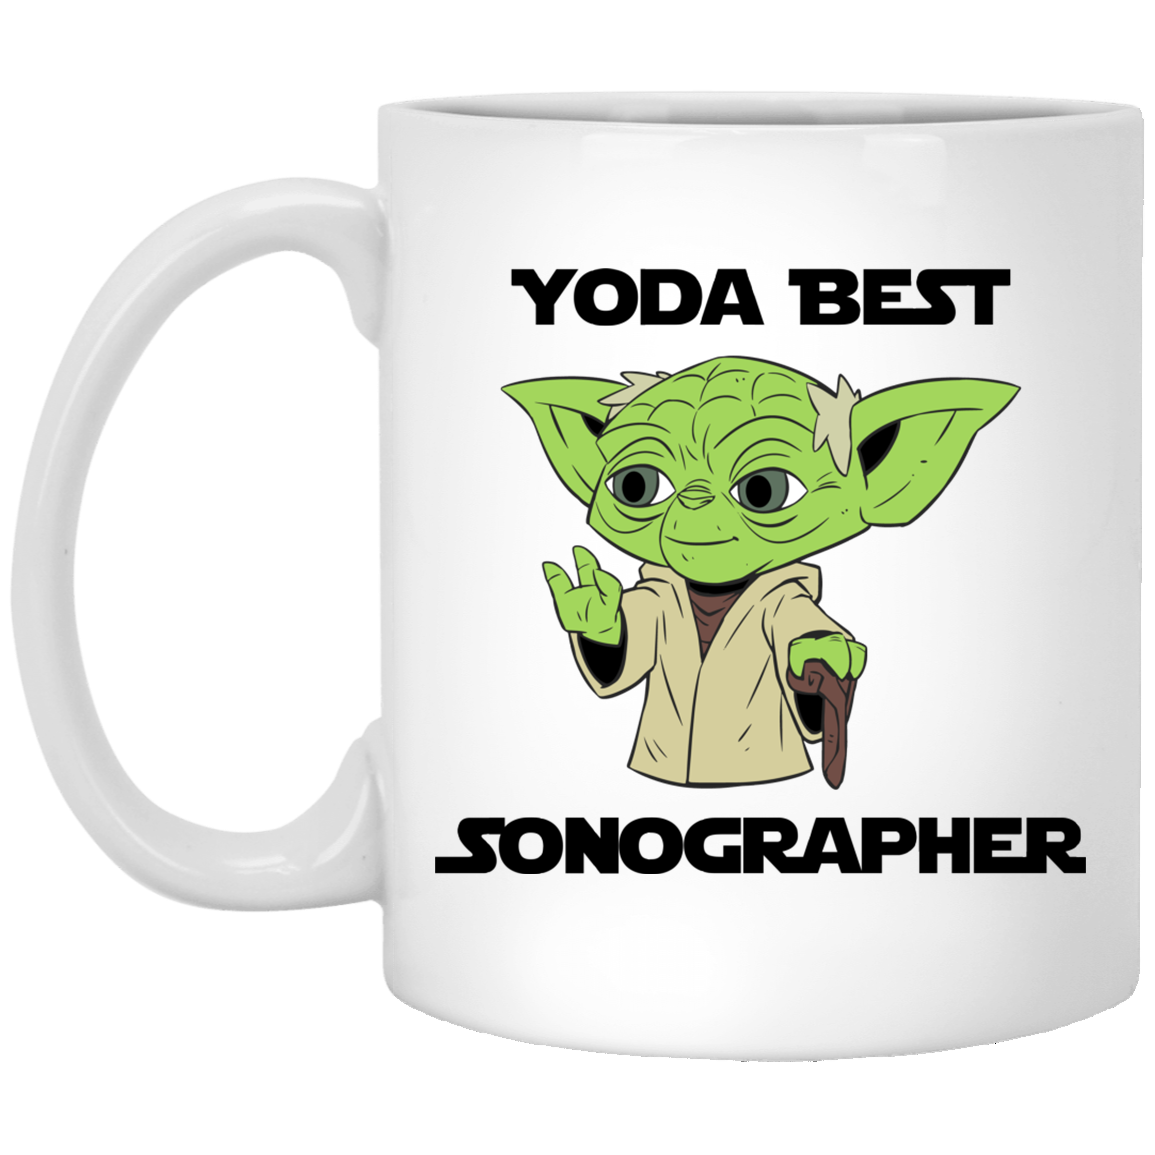 Yoda Best Sonographer Mug